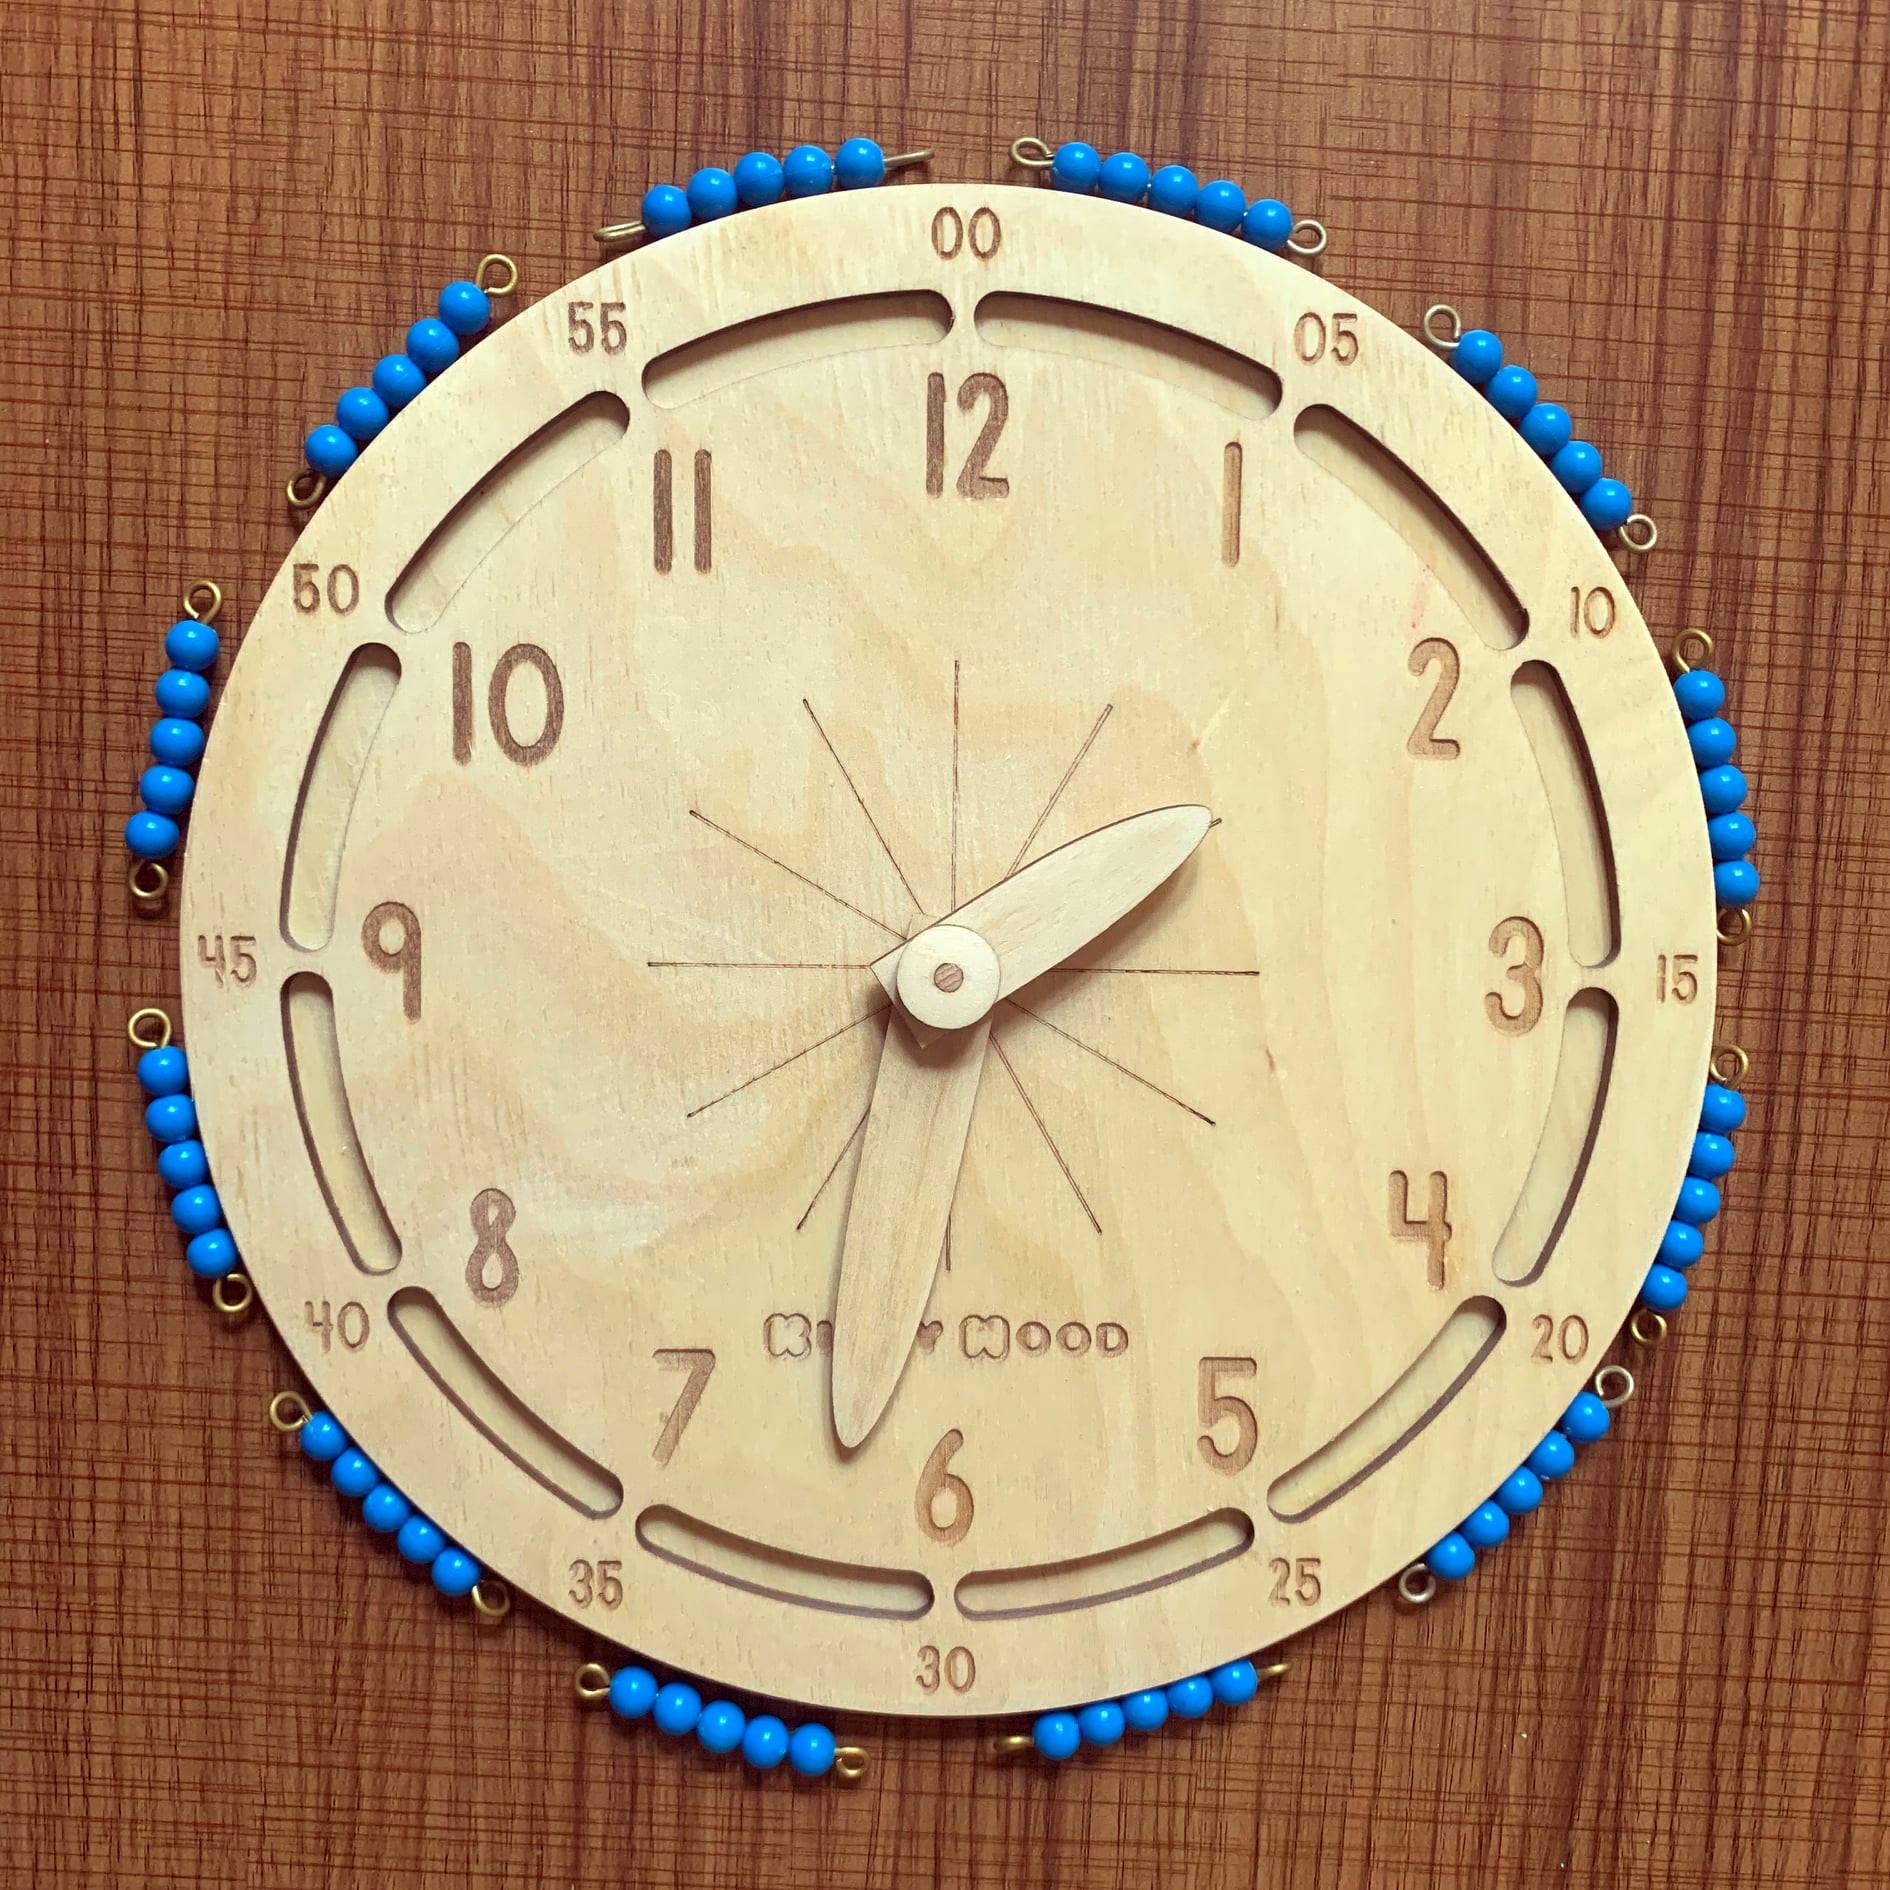 Montessori Wooden Beads Clock - ساعة منتسوري بالخرز خشبية